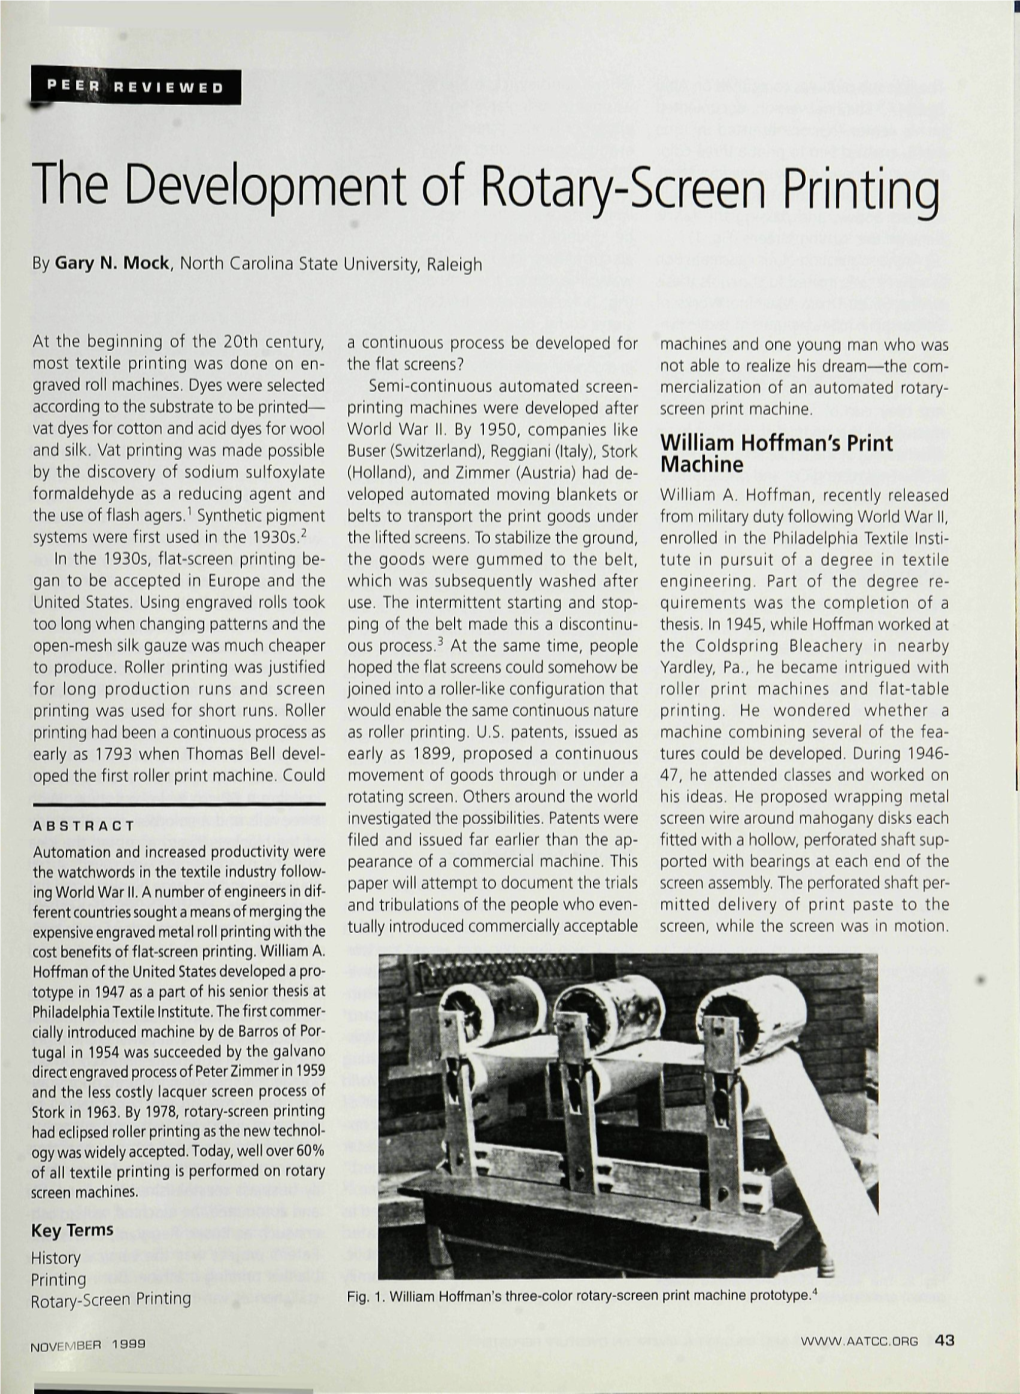 The Development of Rotary-Screen Printing